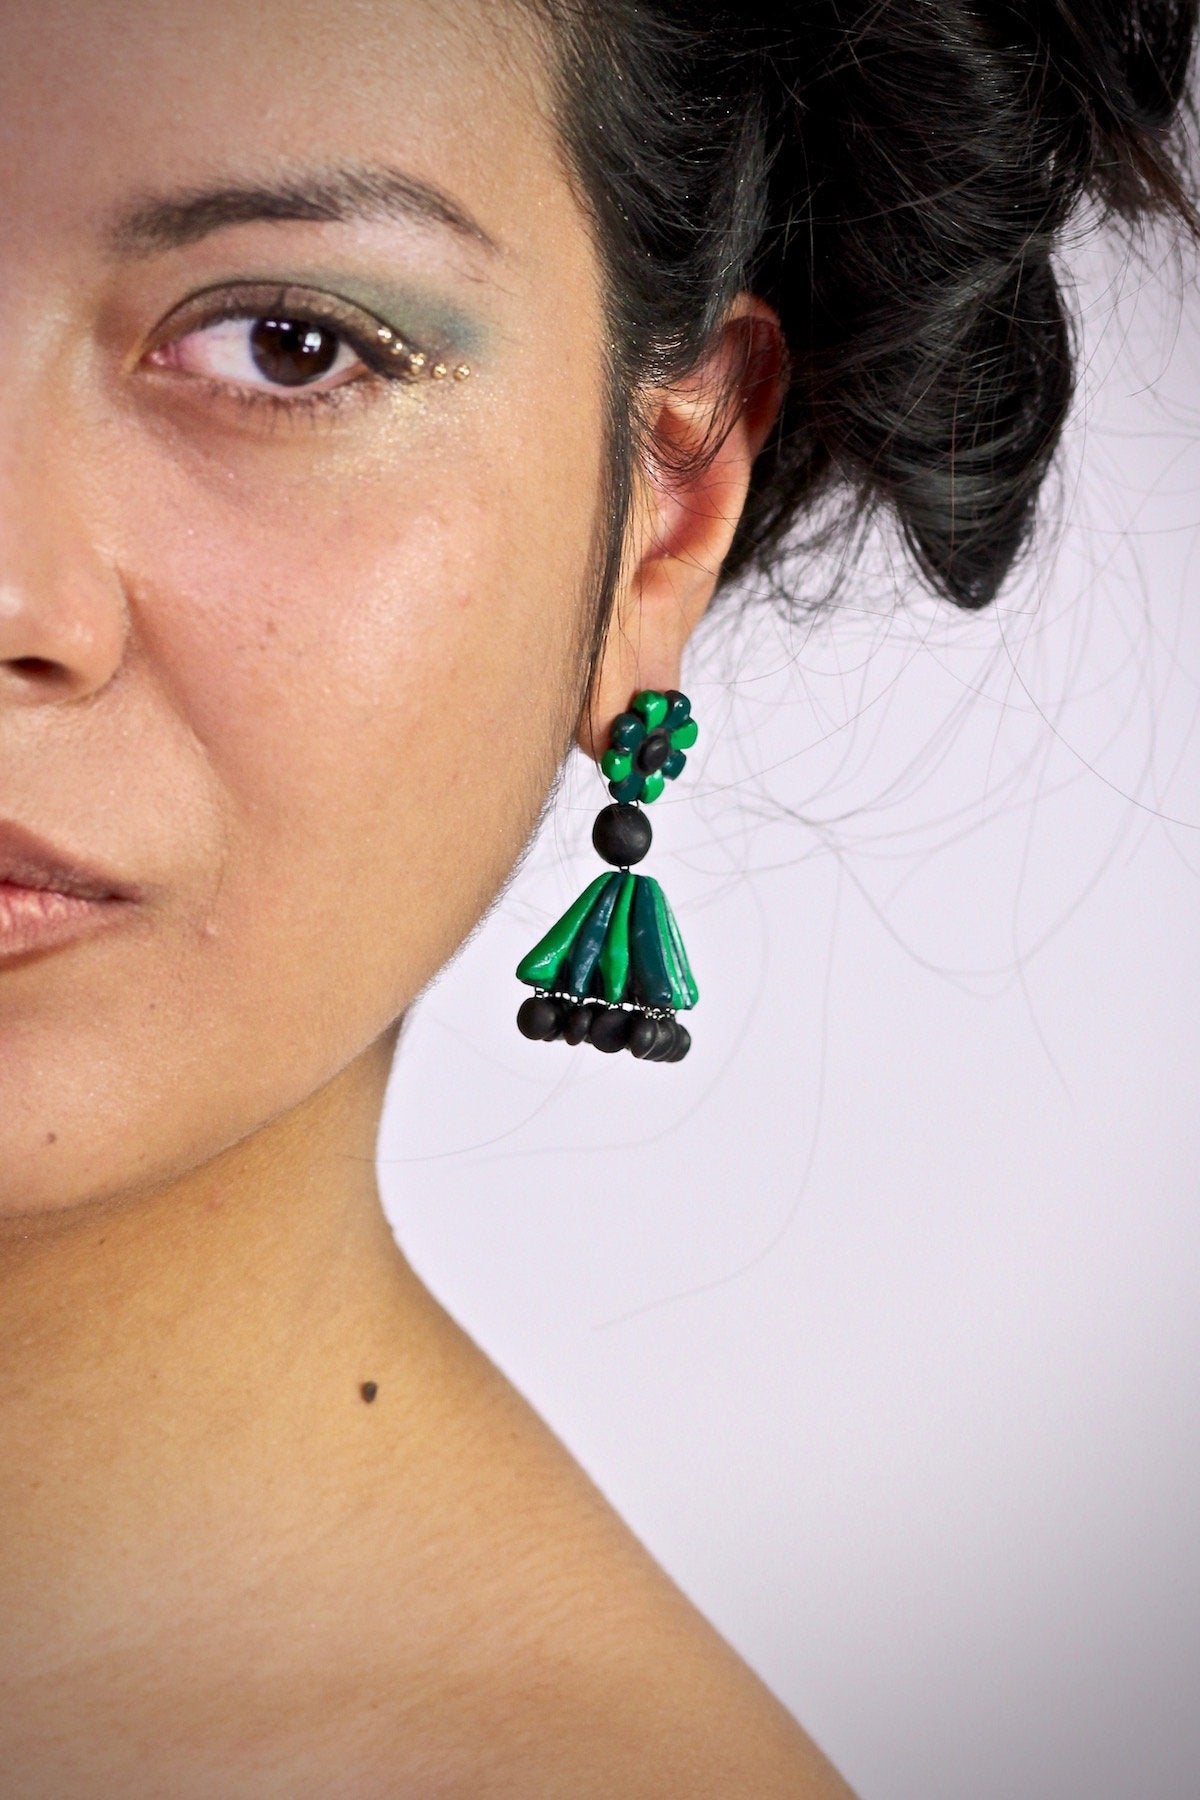 BI Green Flower - Boucles d'oreilles - Azaadi, la mode responsable accessible